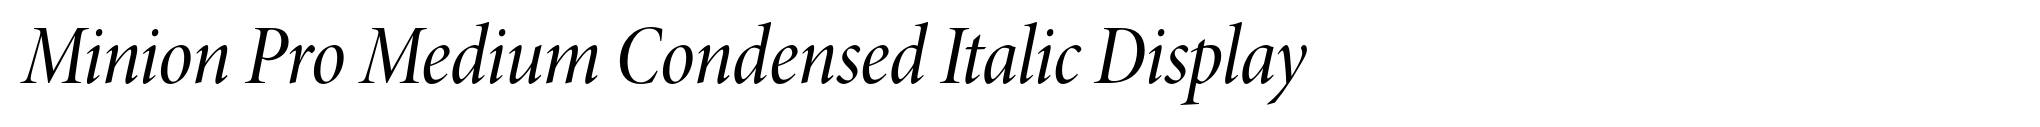 Minion Pro Medium Condensed Italic Display image